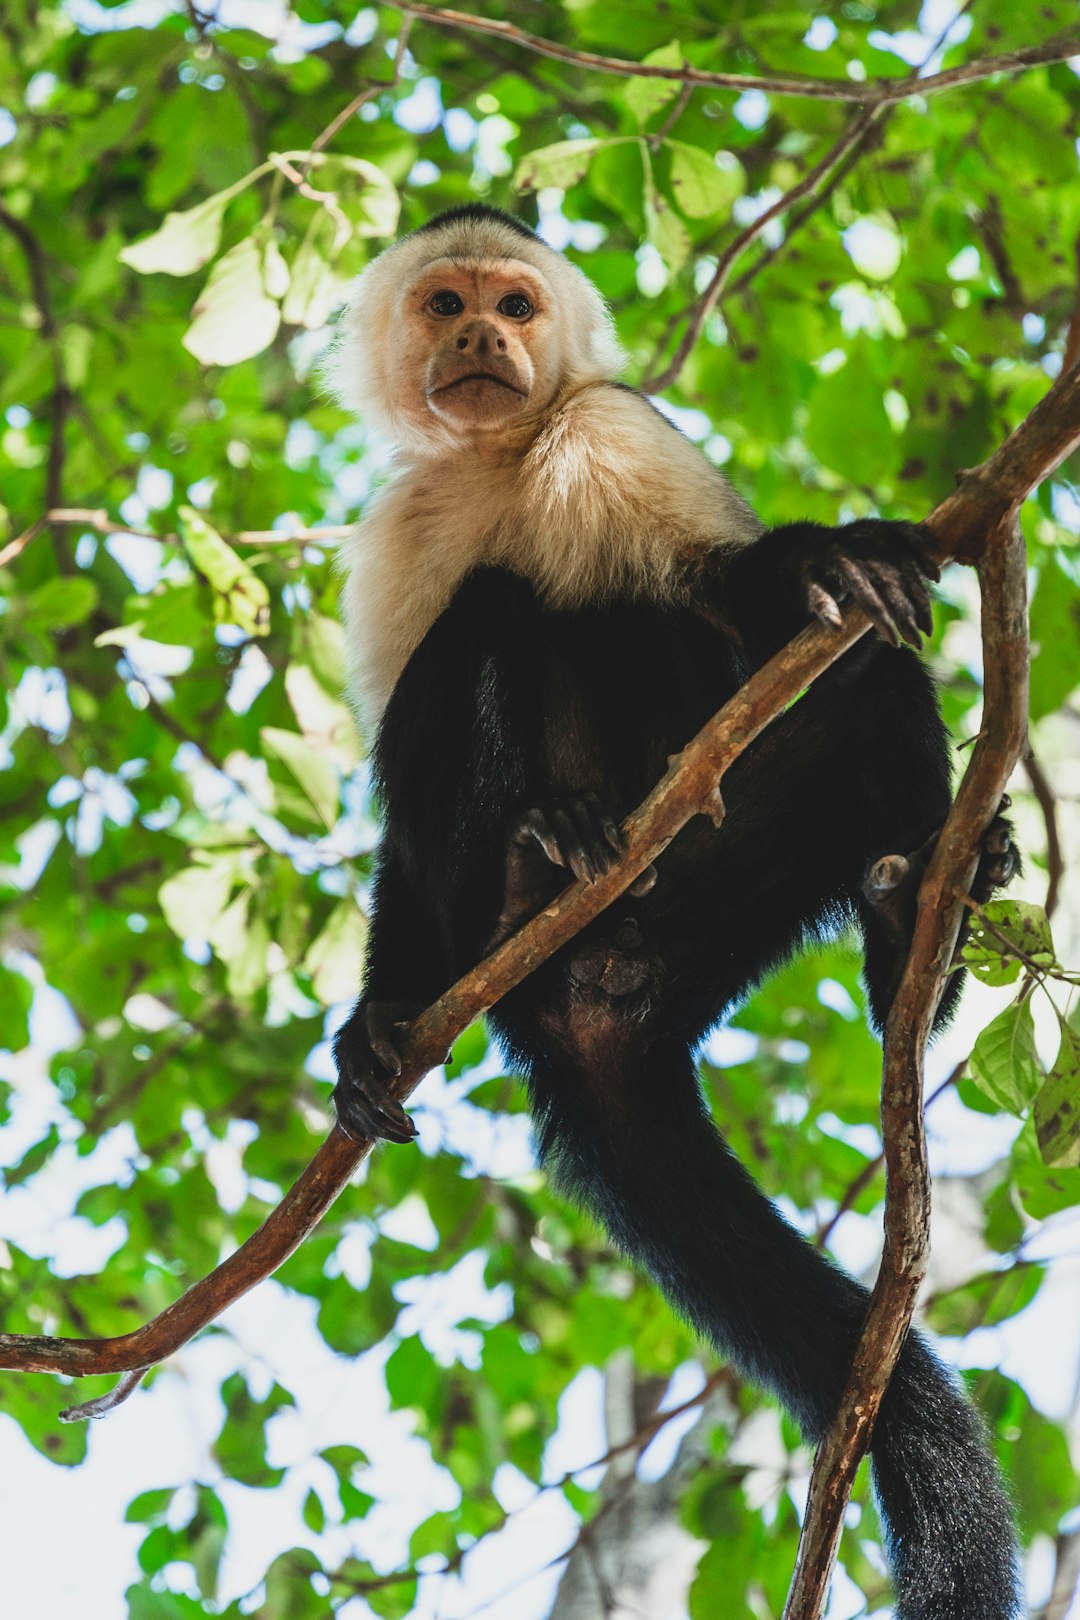  black and white monkey on tree branch during daytime monkey